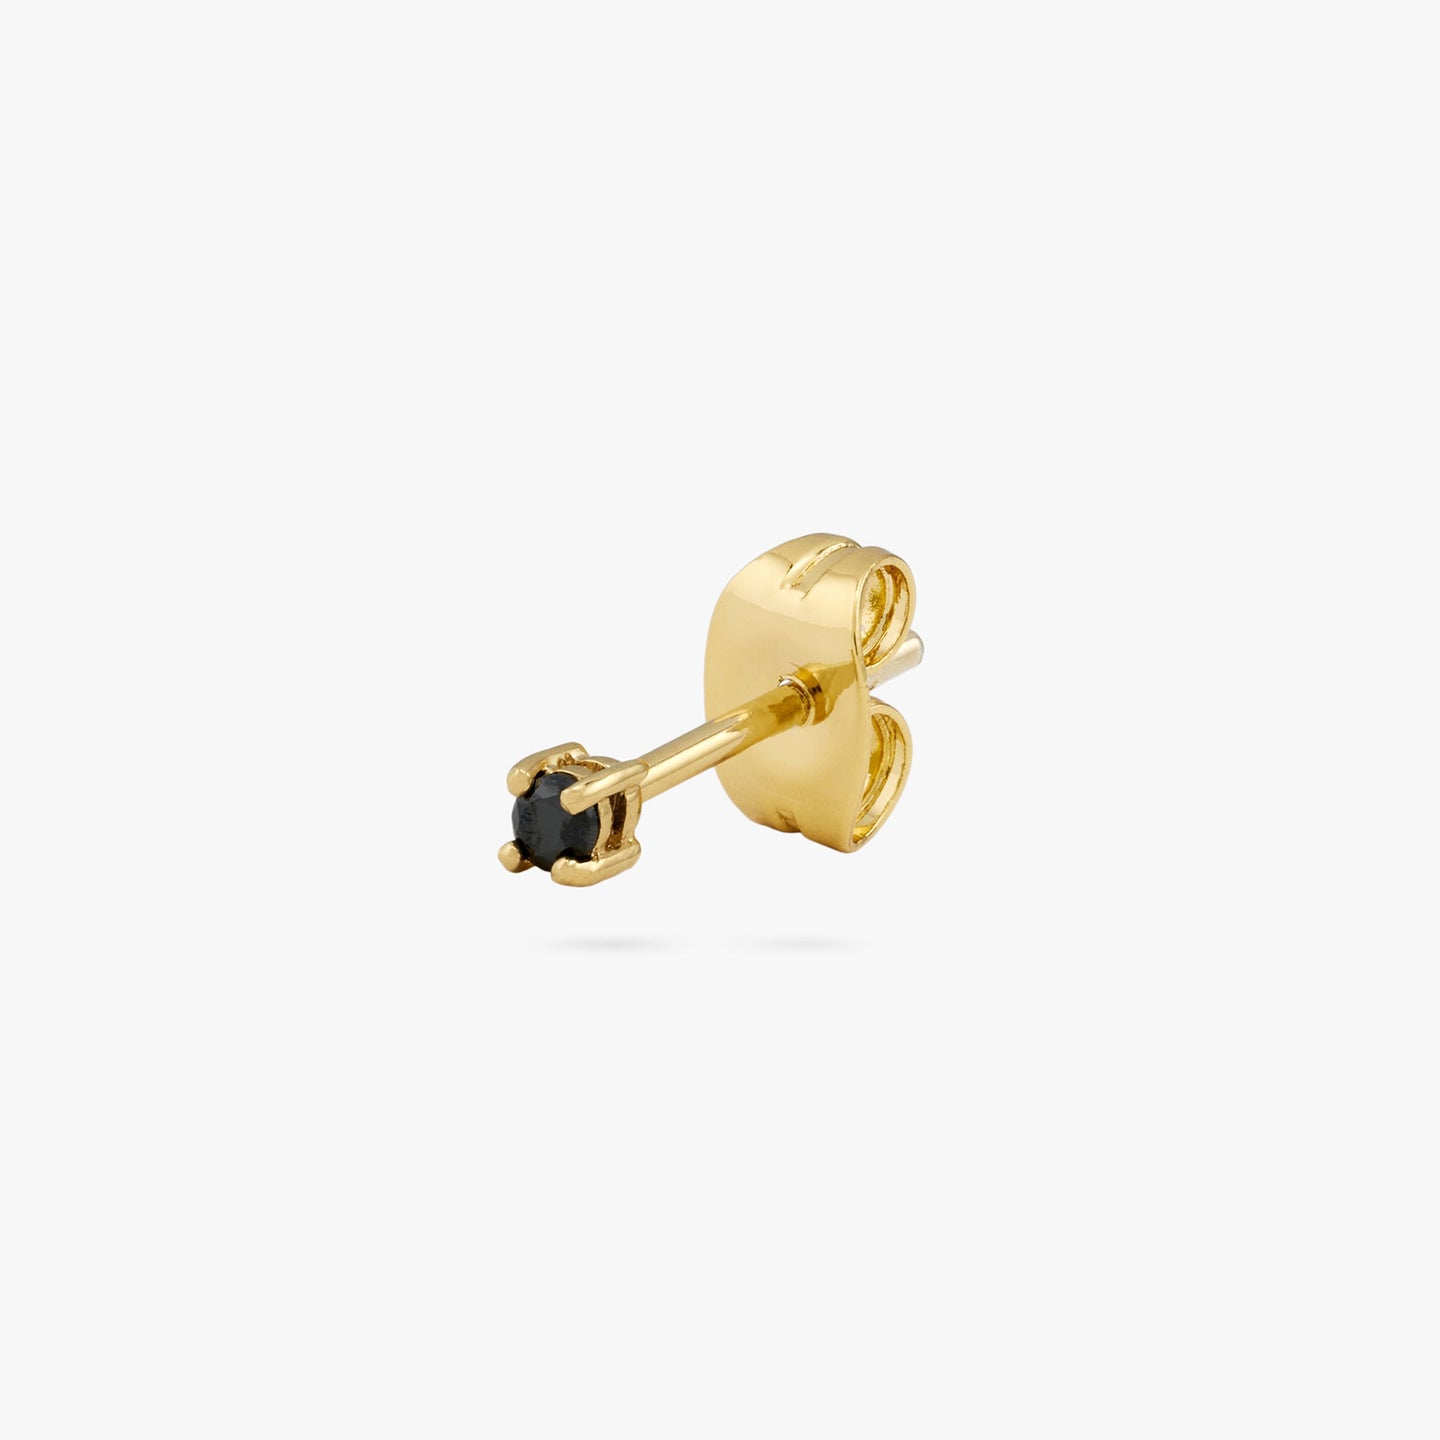 A mini gold stud with a black cz gem color:null|gold/black